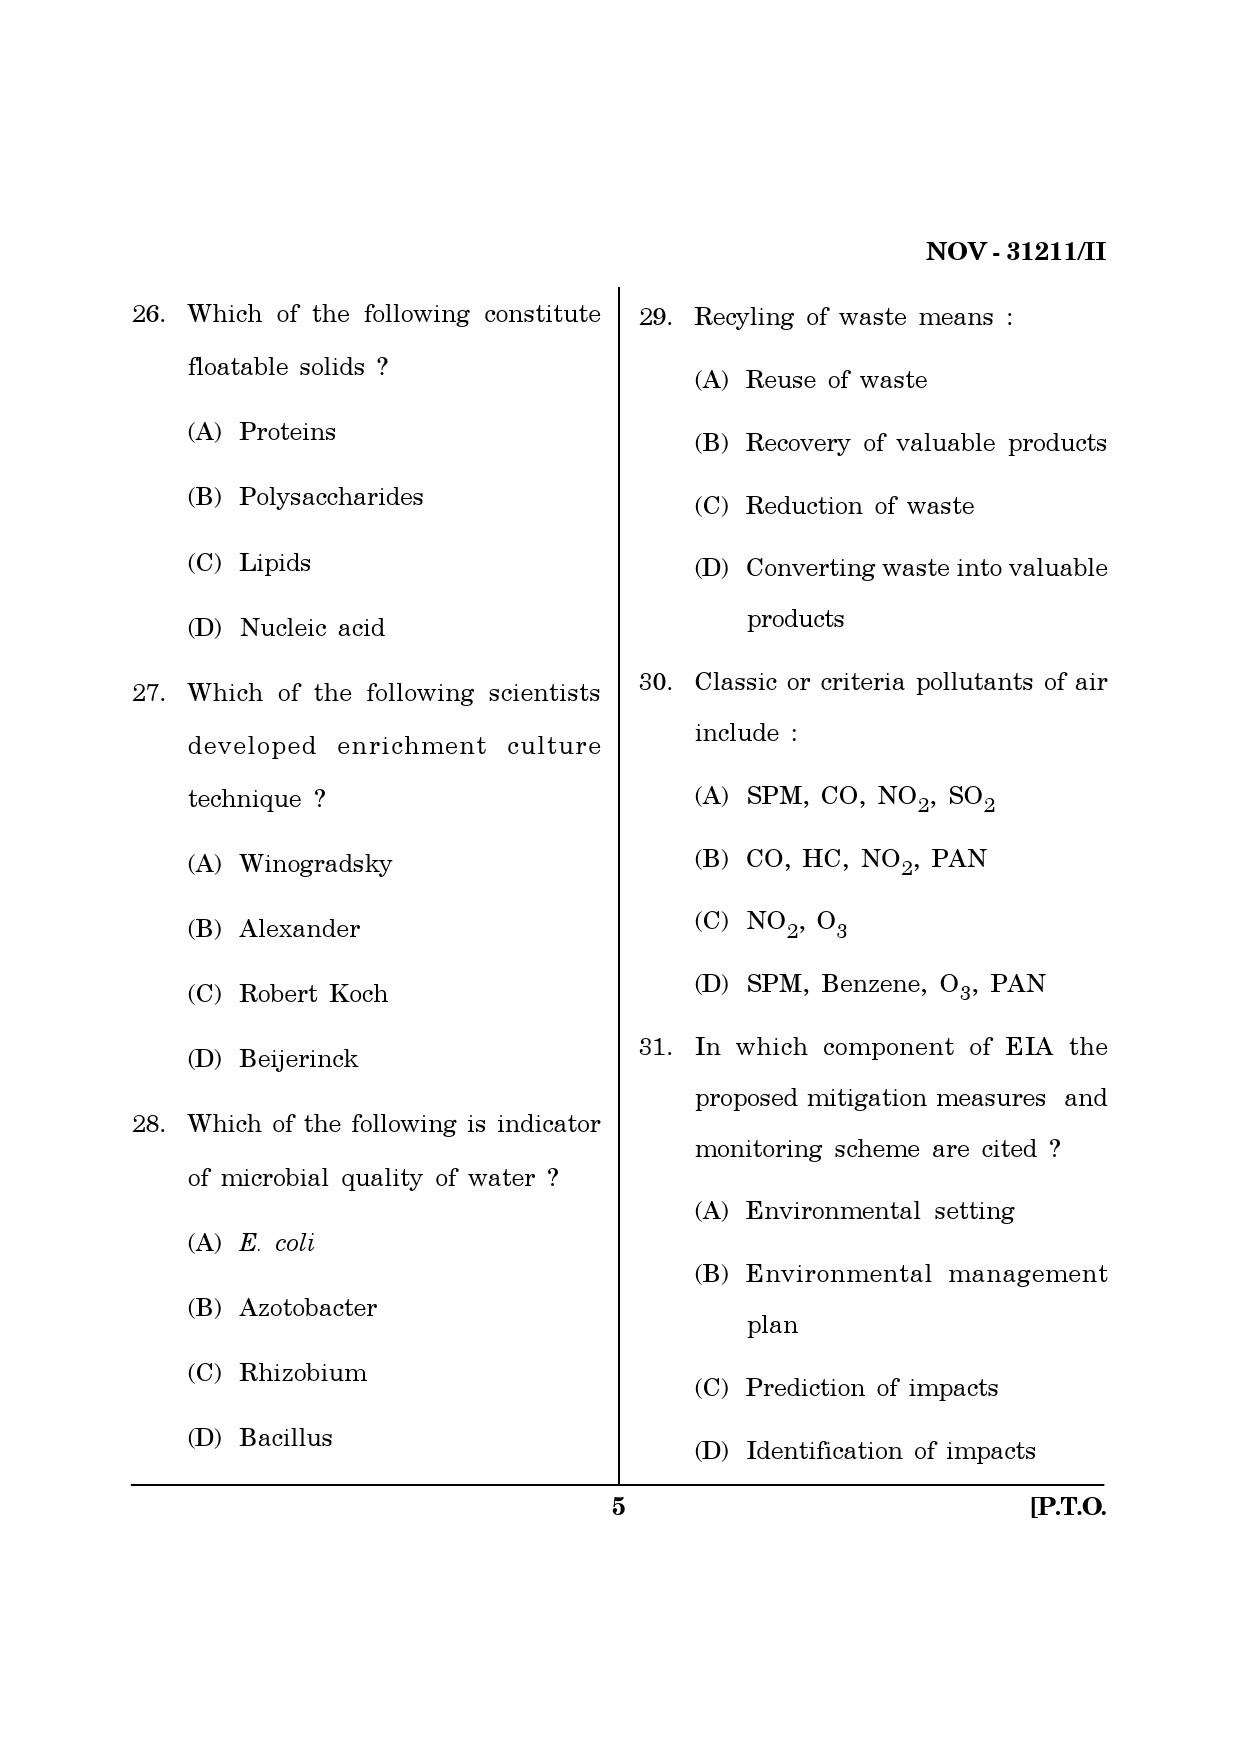 Maharashtra SET Environmental Sciences Question Paper II November 2011 5